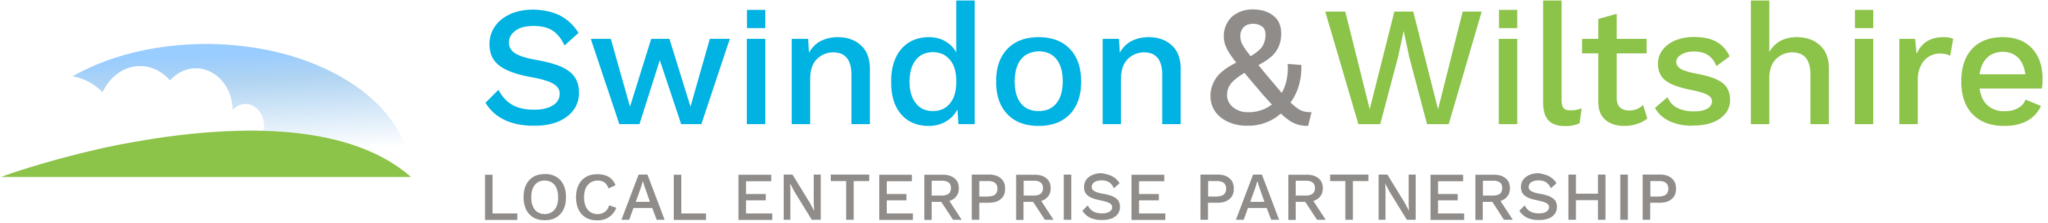 Swindon and Wiltshire Local Enterprise Partnership